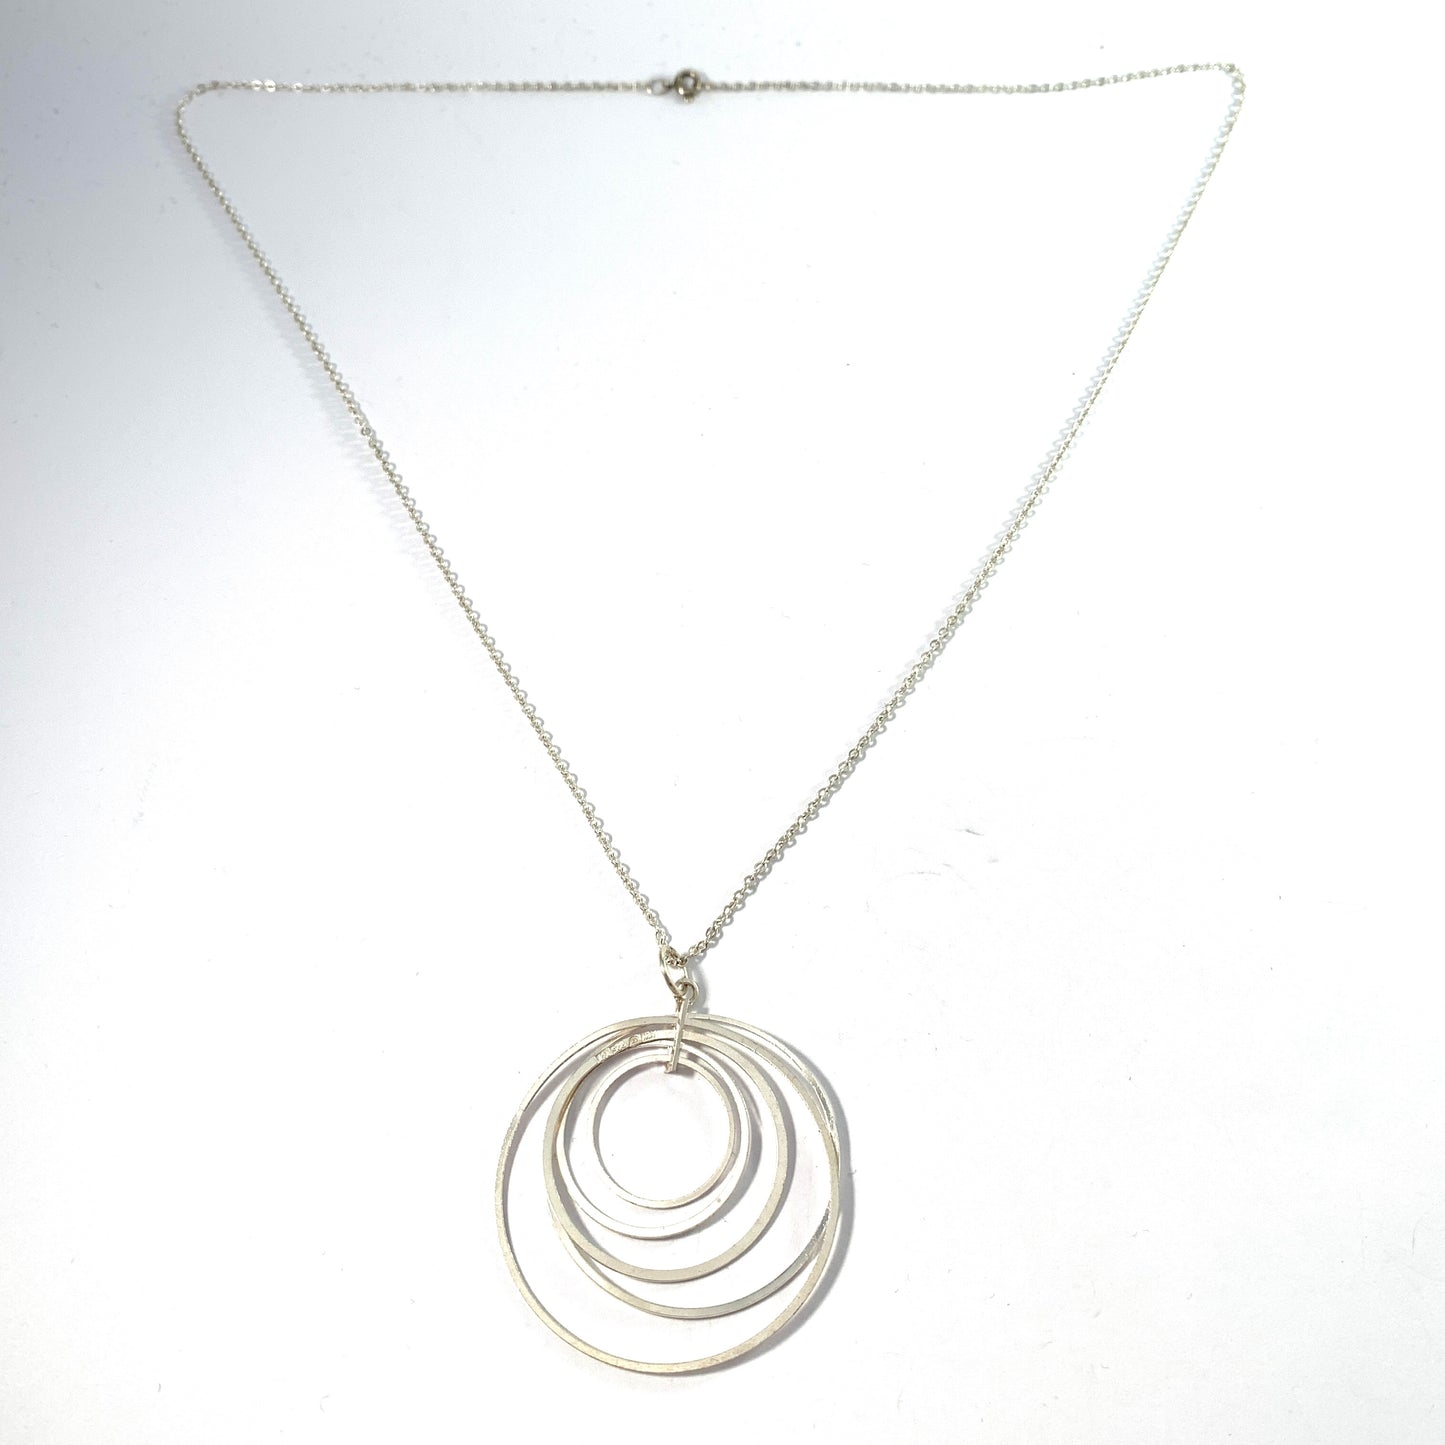 Tapio Wirkkala for N Westerback, Finland 1973 Sterling Silver Pendant Necklace.